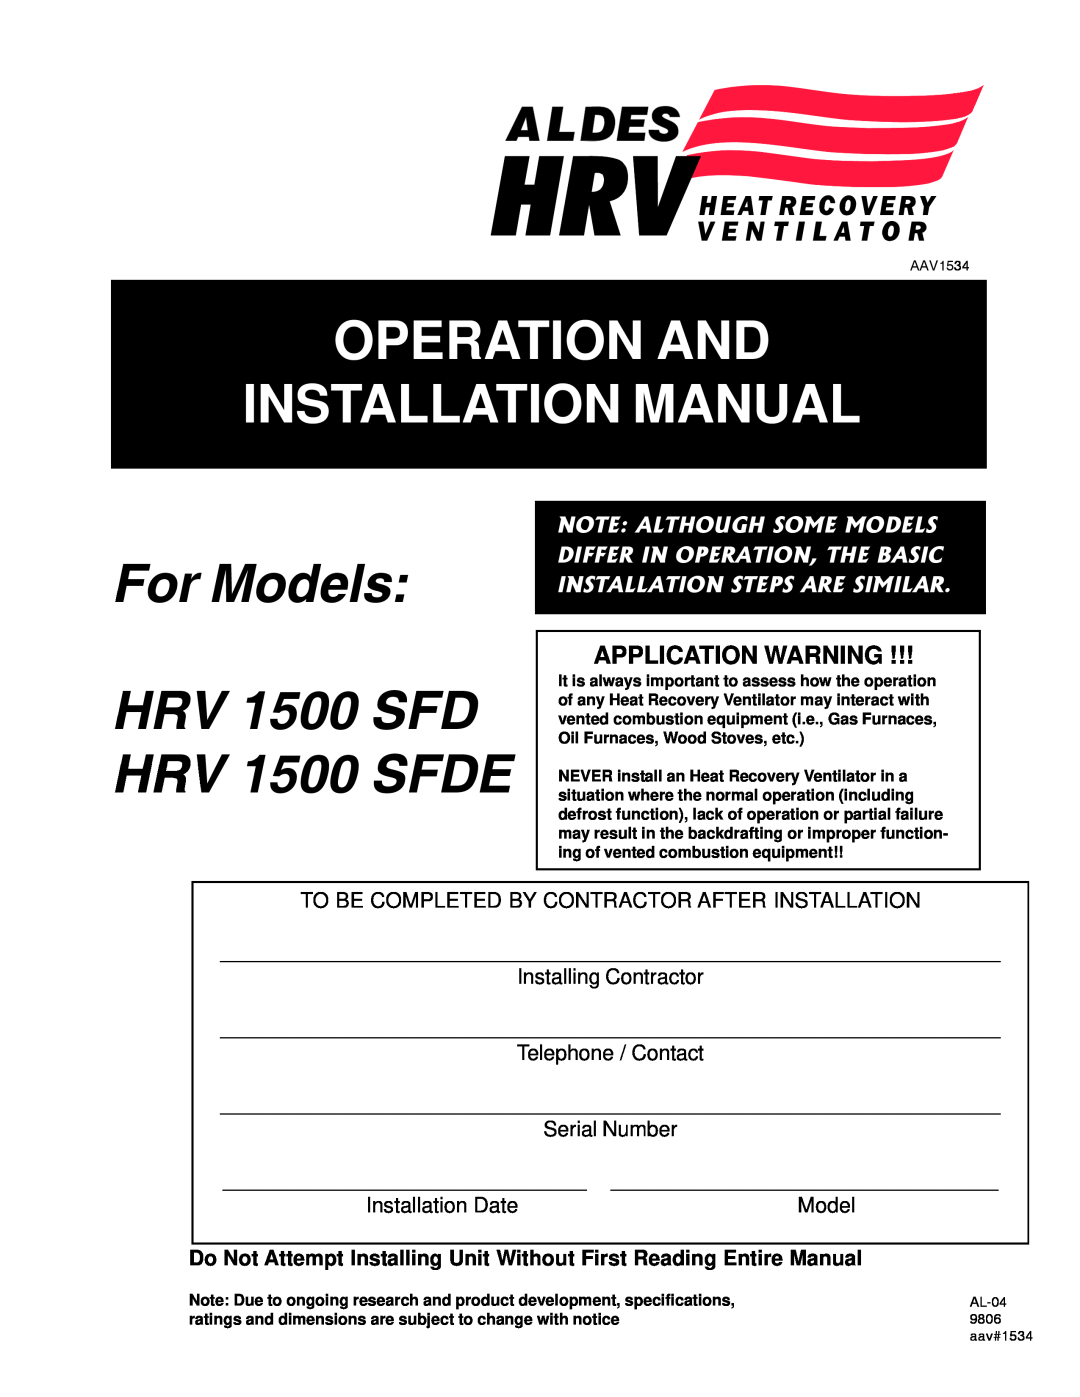 American Aldes HRV 1500 SFD installation manual Application Warning, Operation And Installation Manual, HRV 1500 IFD 